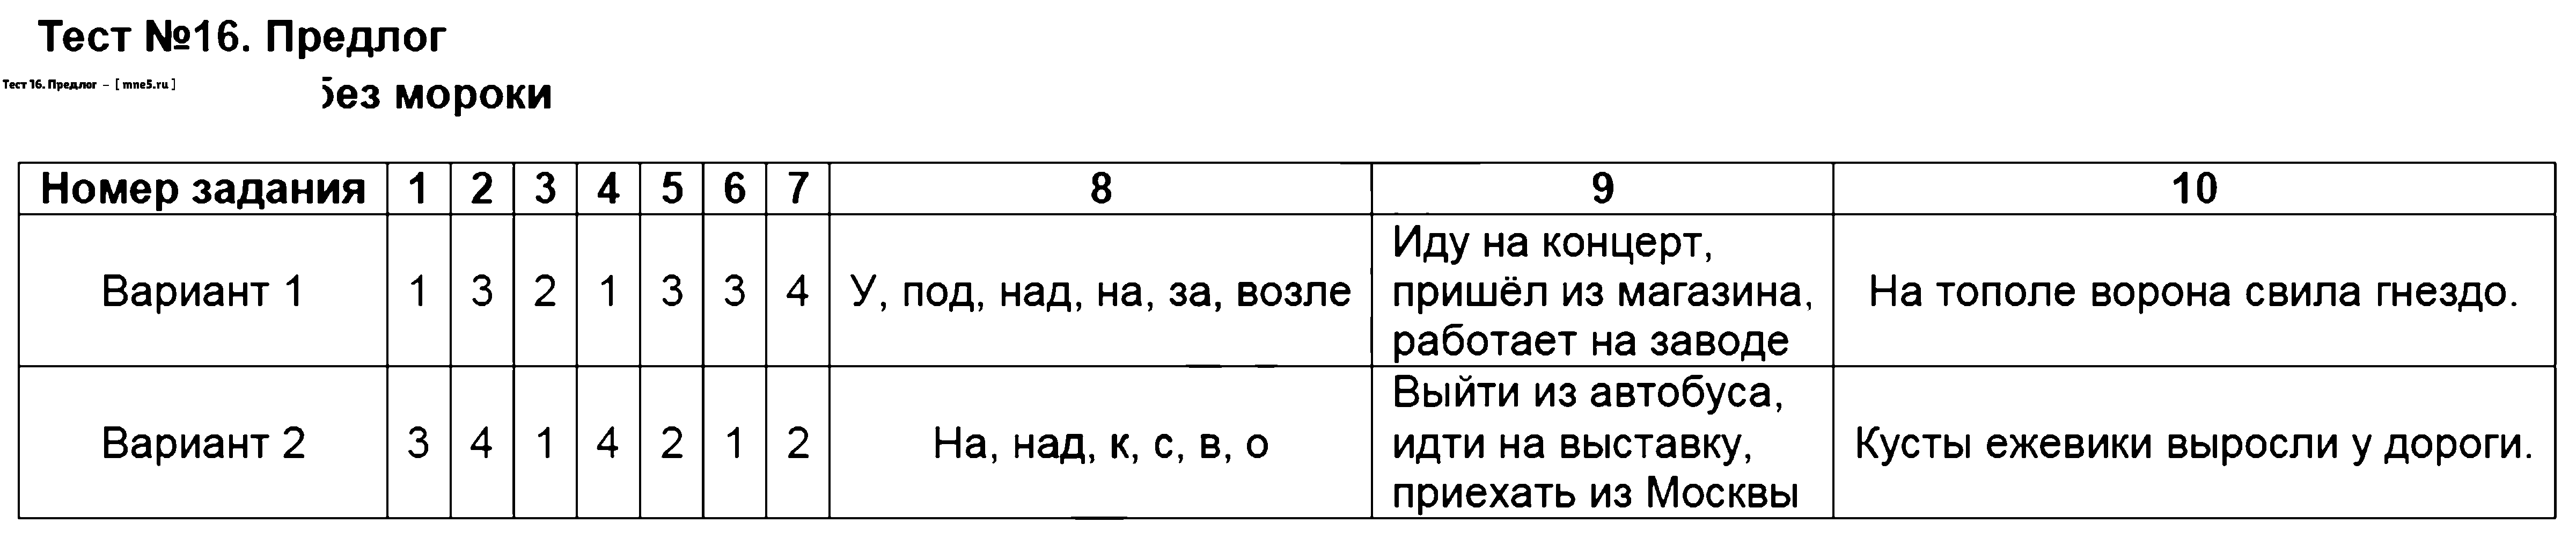 ГДЗ Русский язык 2 класс - Тест 16. Предлог